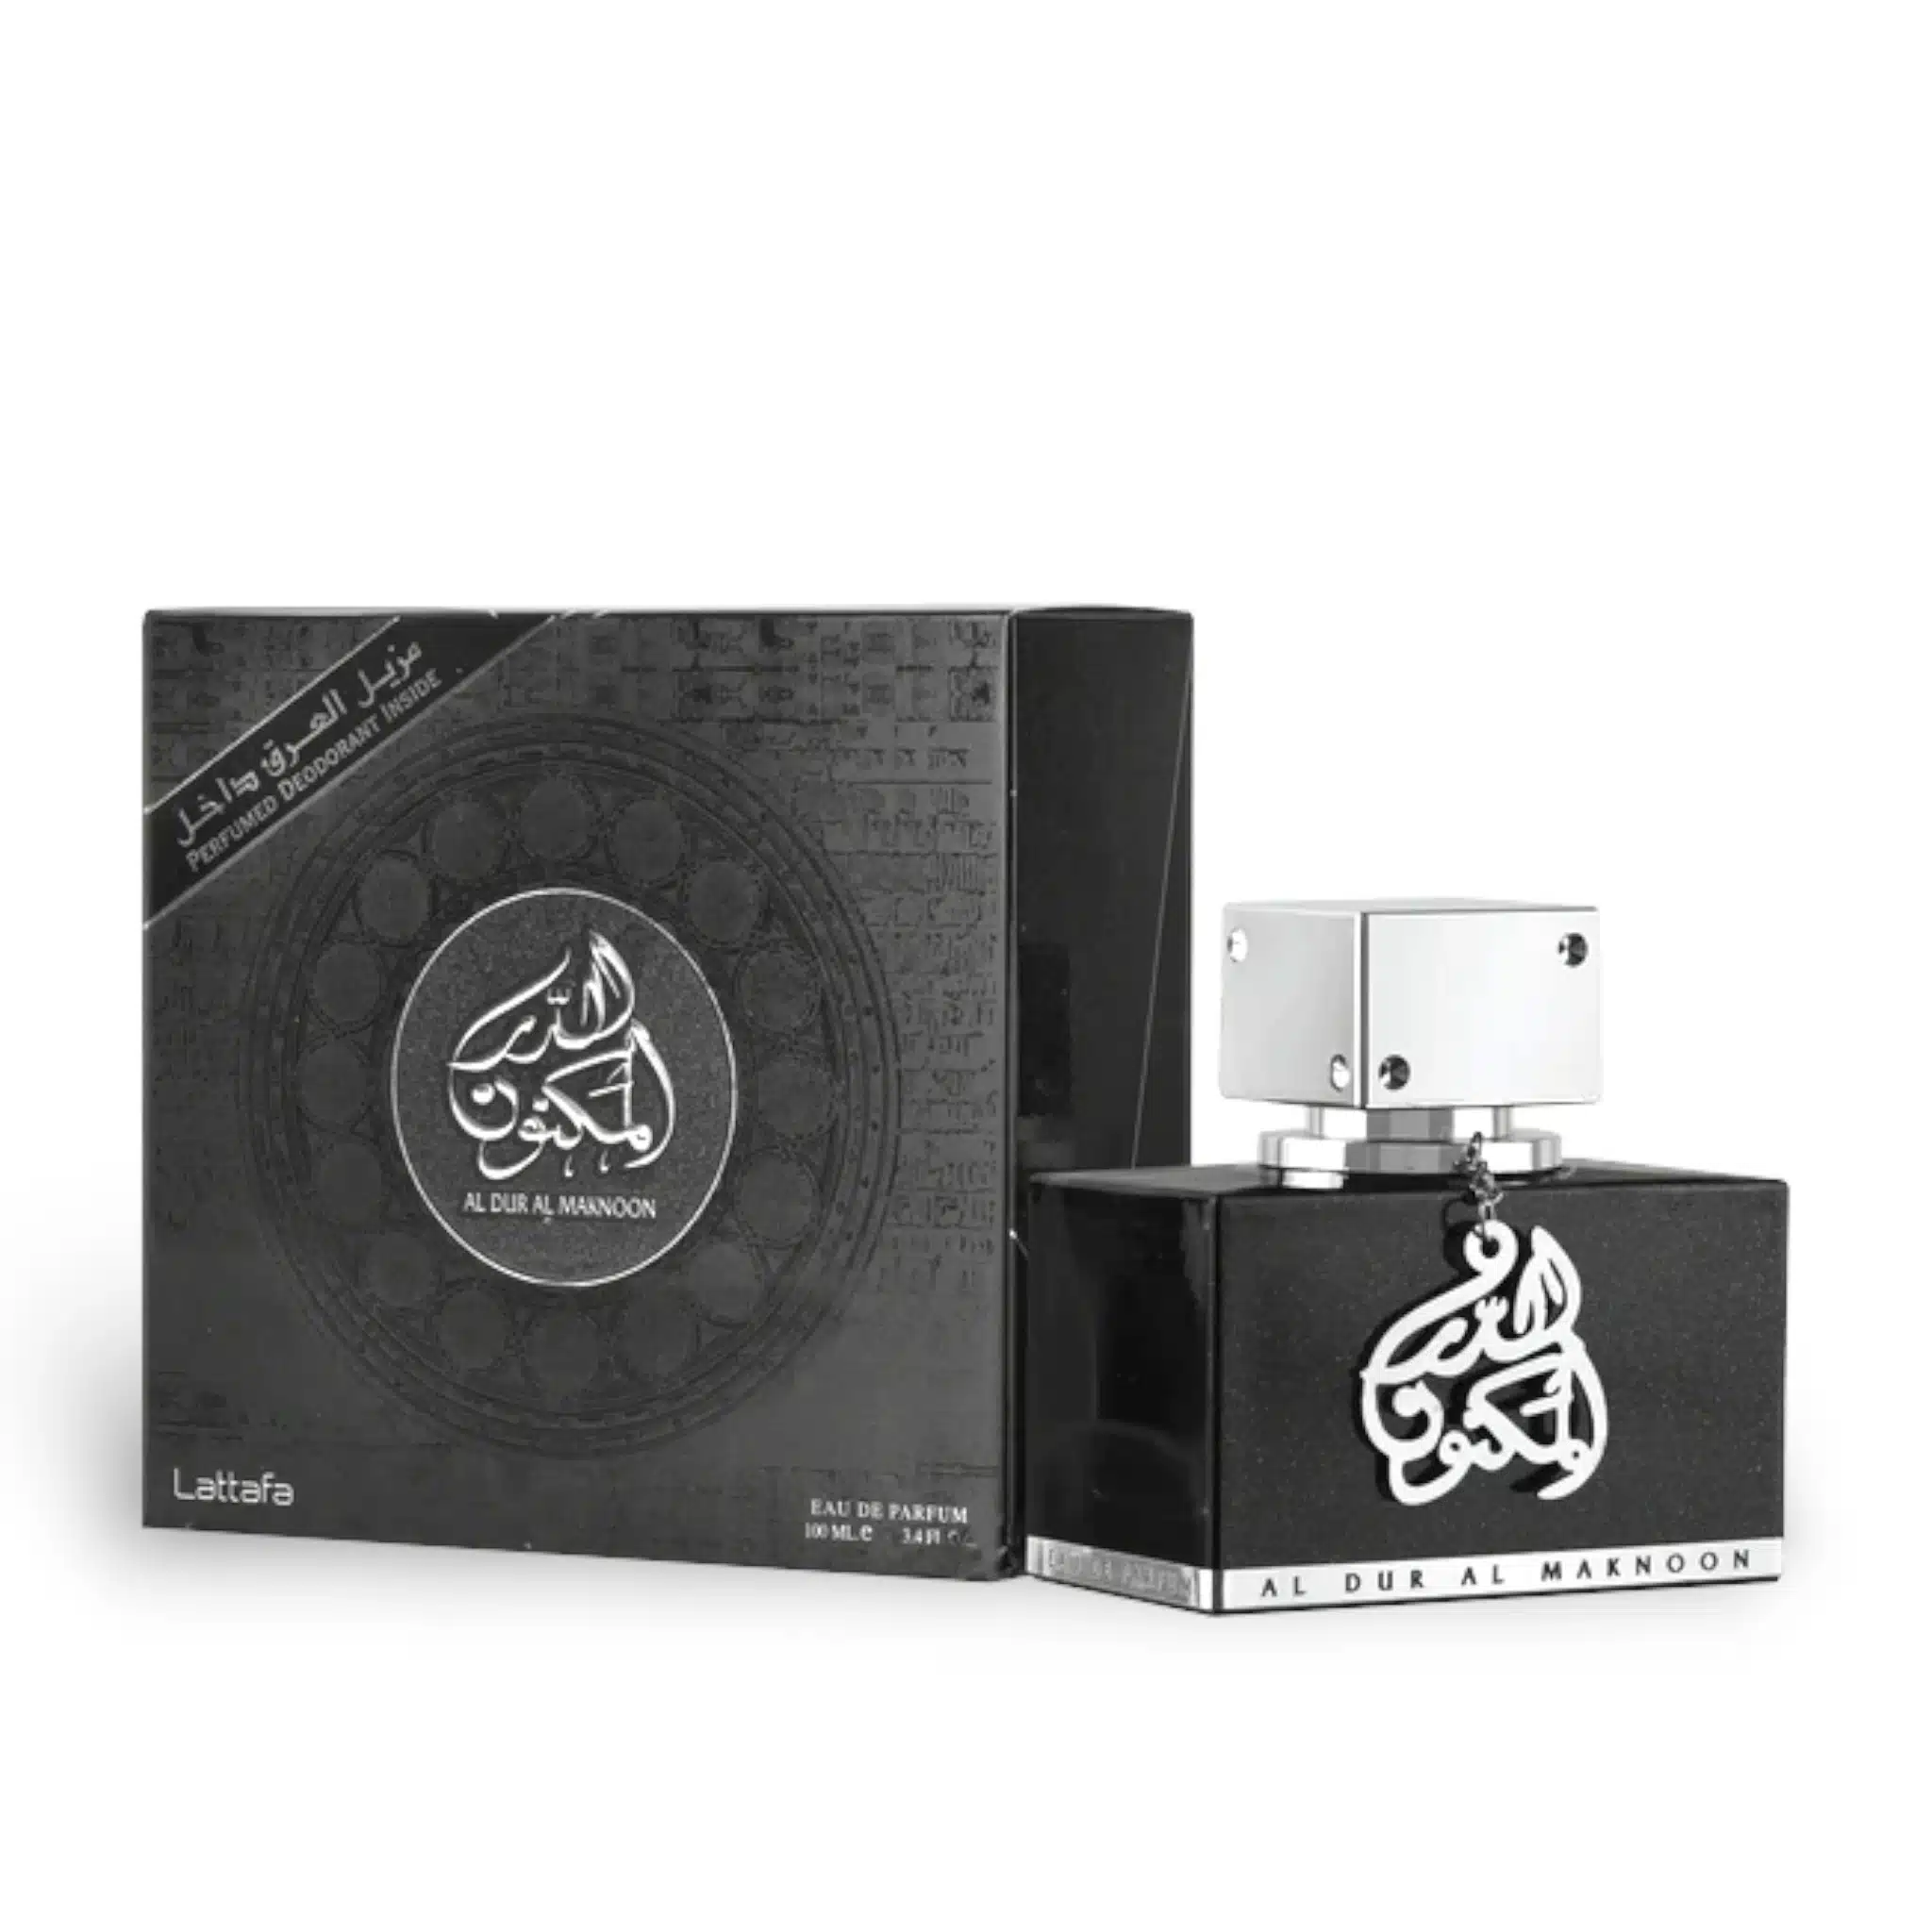 Al Dur Al Maknoon Silver Perfume Eau De Parfum 100Ml By Lattafa